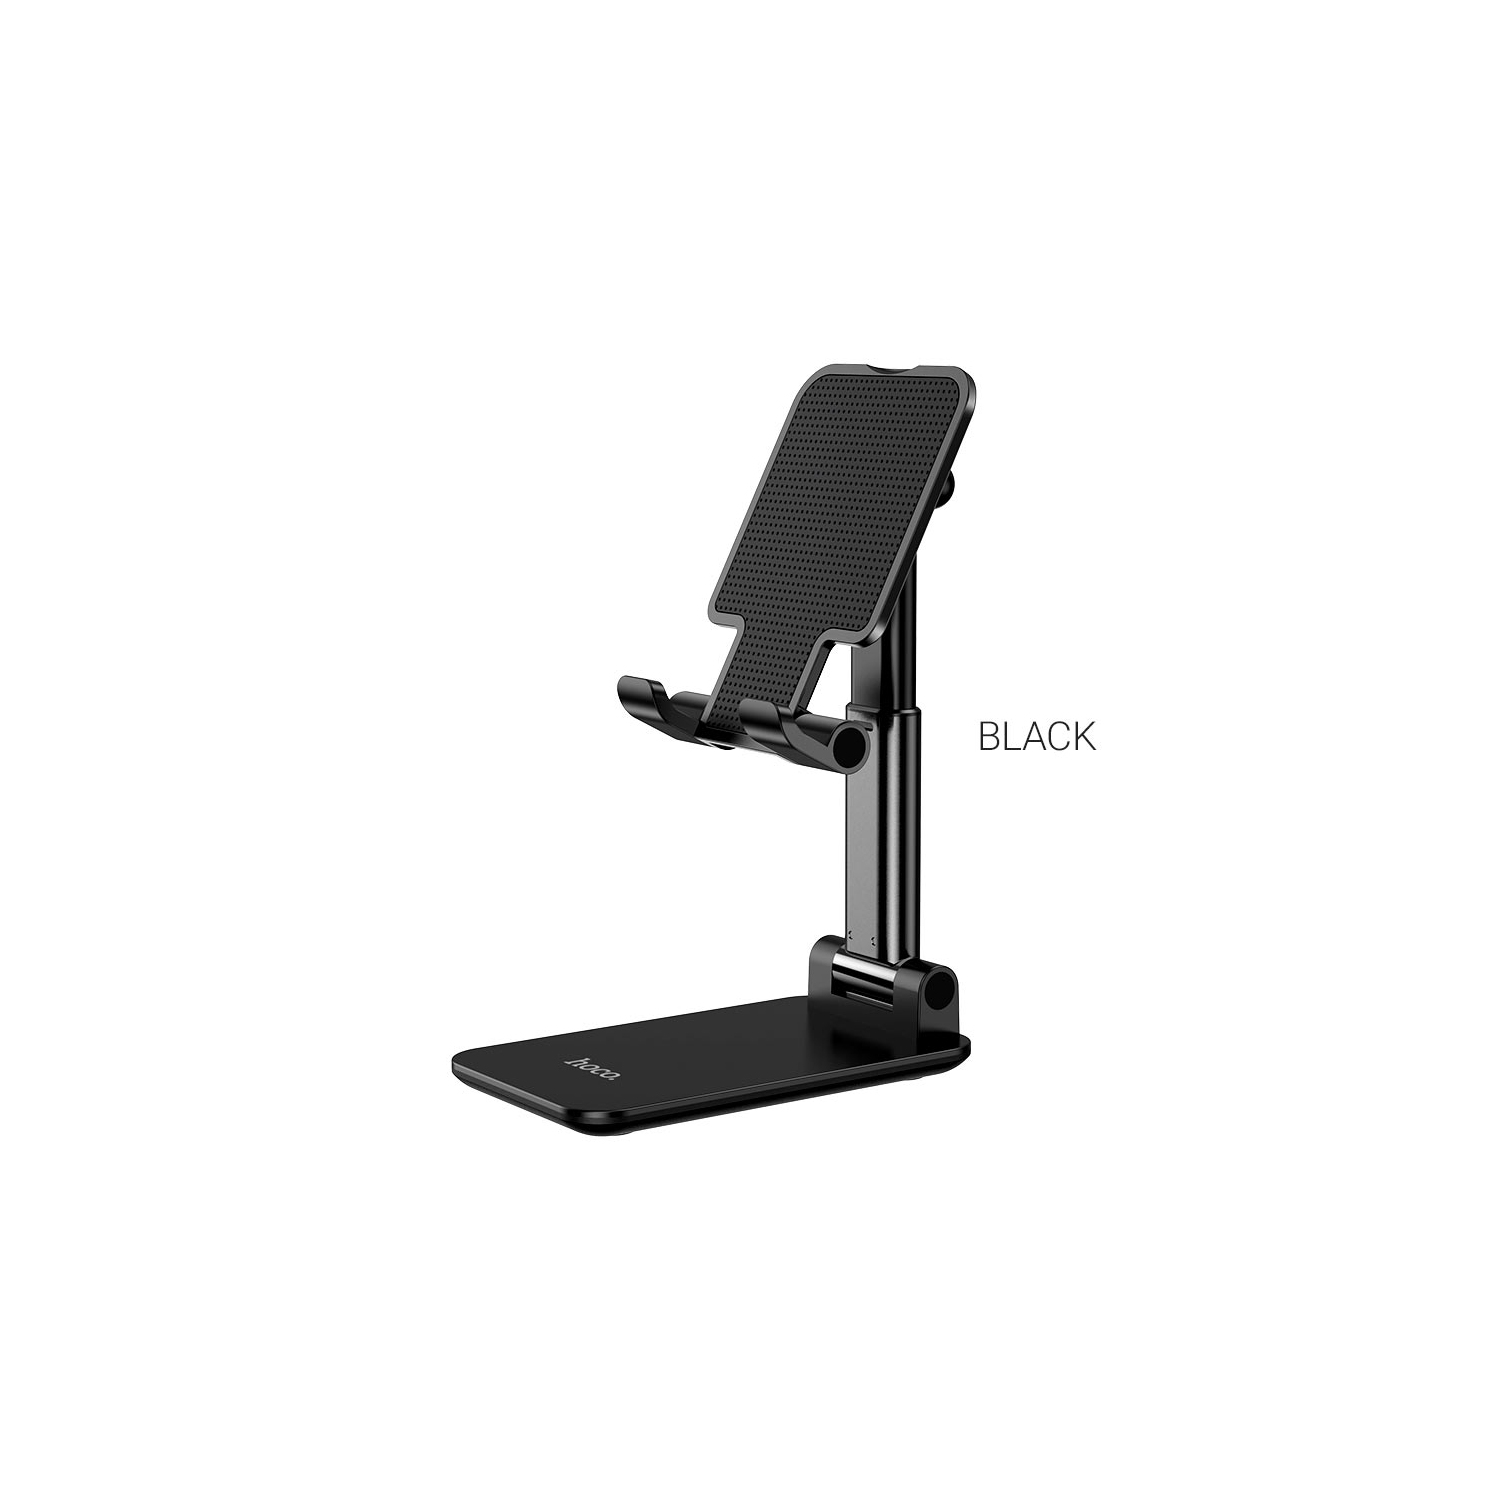 【CSmart】 360 Rotating Tablet Desk Stand Flexible Cellphone Holder Mount for iPhone / iPad / Samsung Tablet / Smartphone, Black